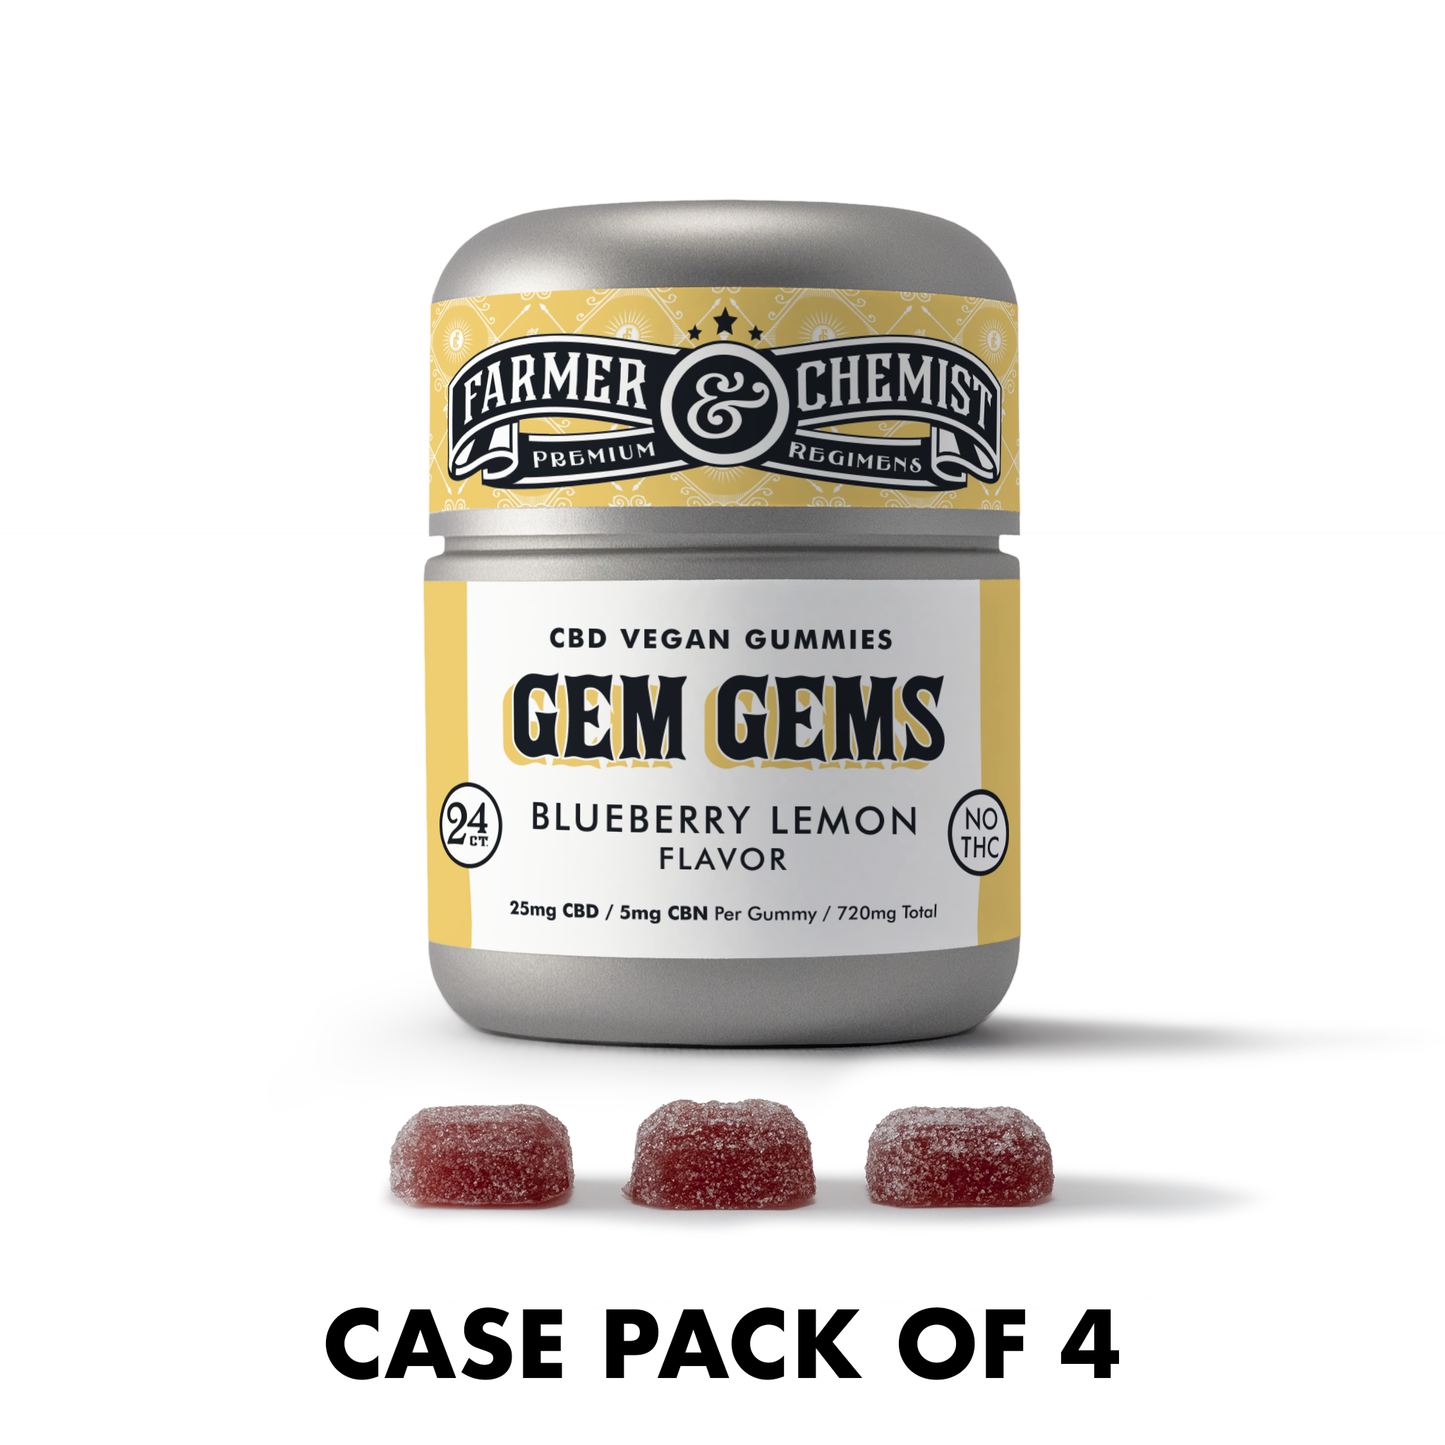 GEM GEMS - 24ct 25mg CBD / 5mg CBN Blueberry Lemon Flavor (Case pack of 4)